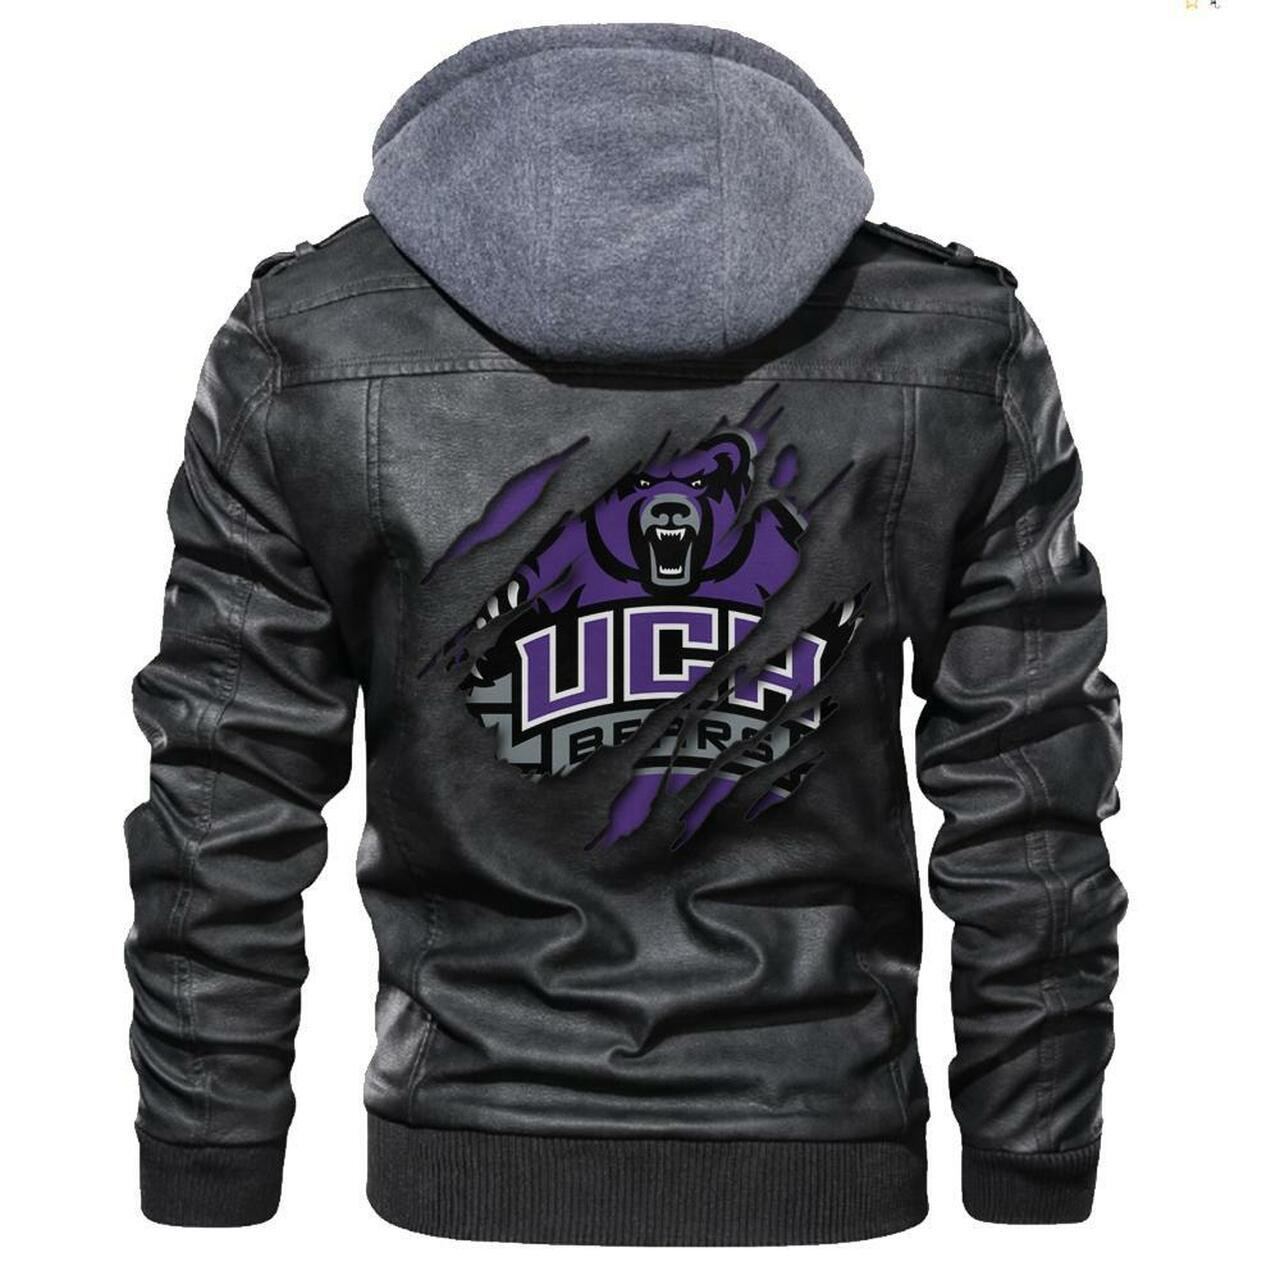 Top leather jacket Sells Best on Techcomshop 22